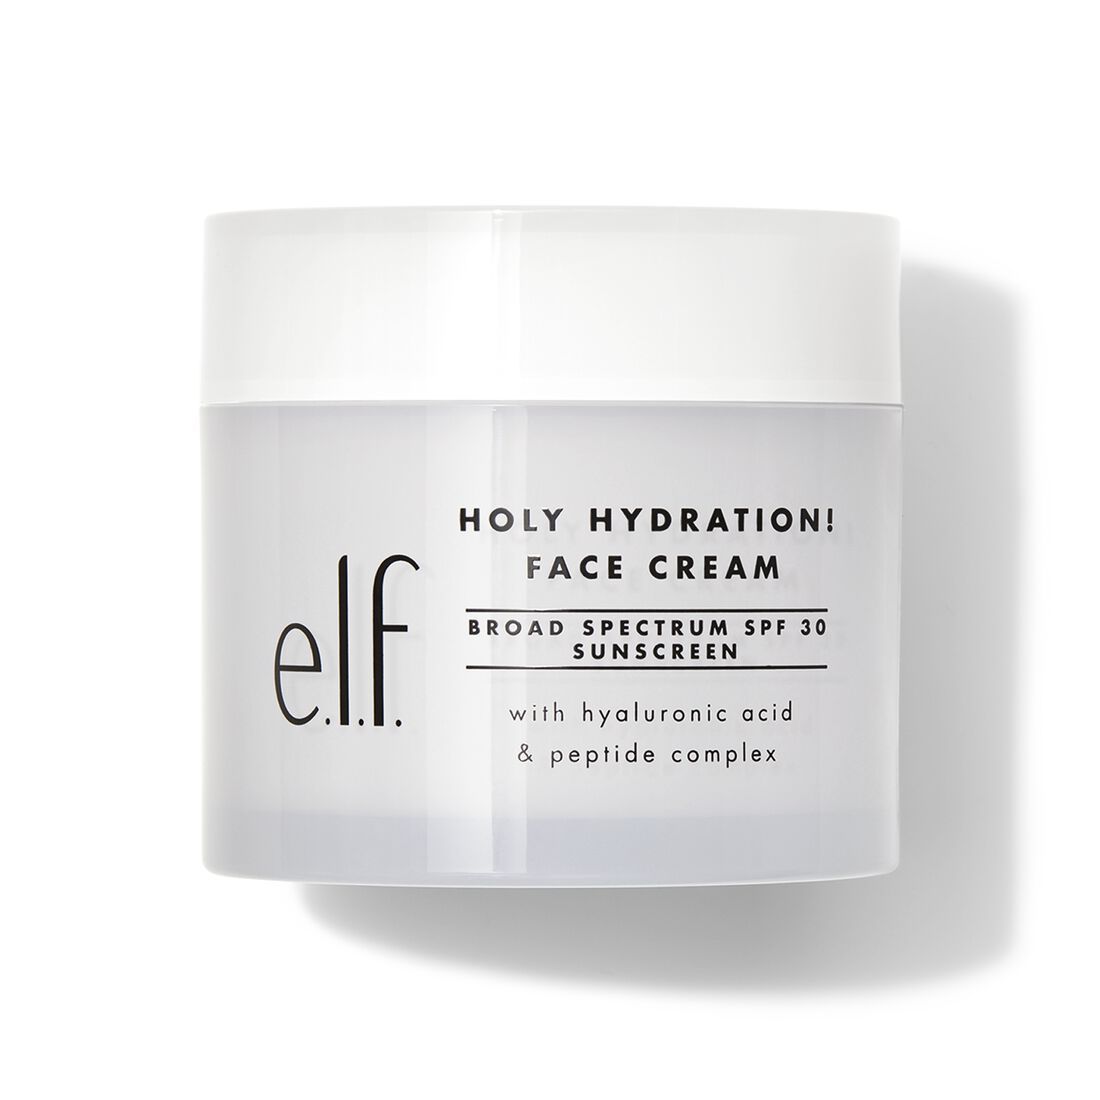 Holy Hydration! Face Cream - SPF 30 | e.l.f. cosmetics (US)